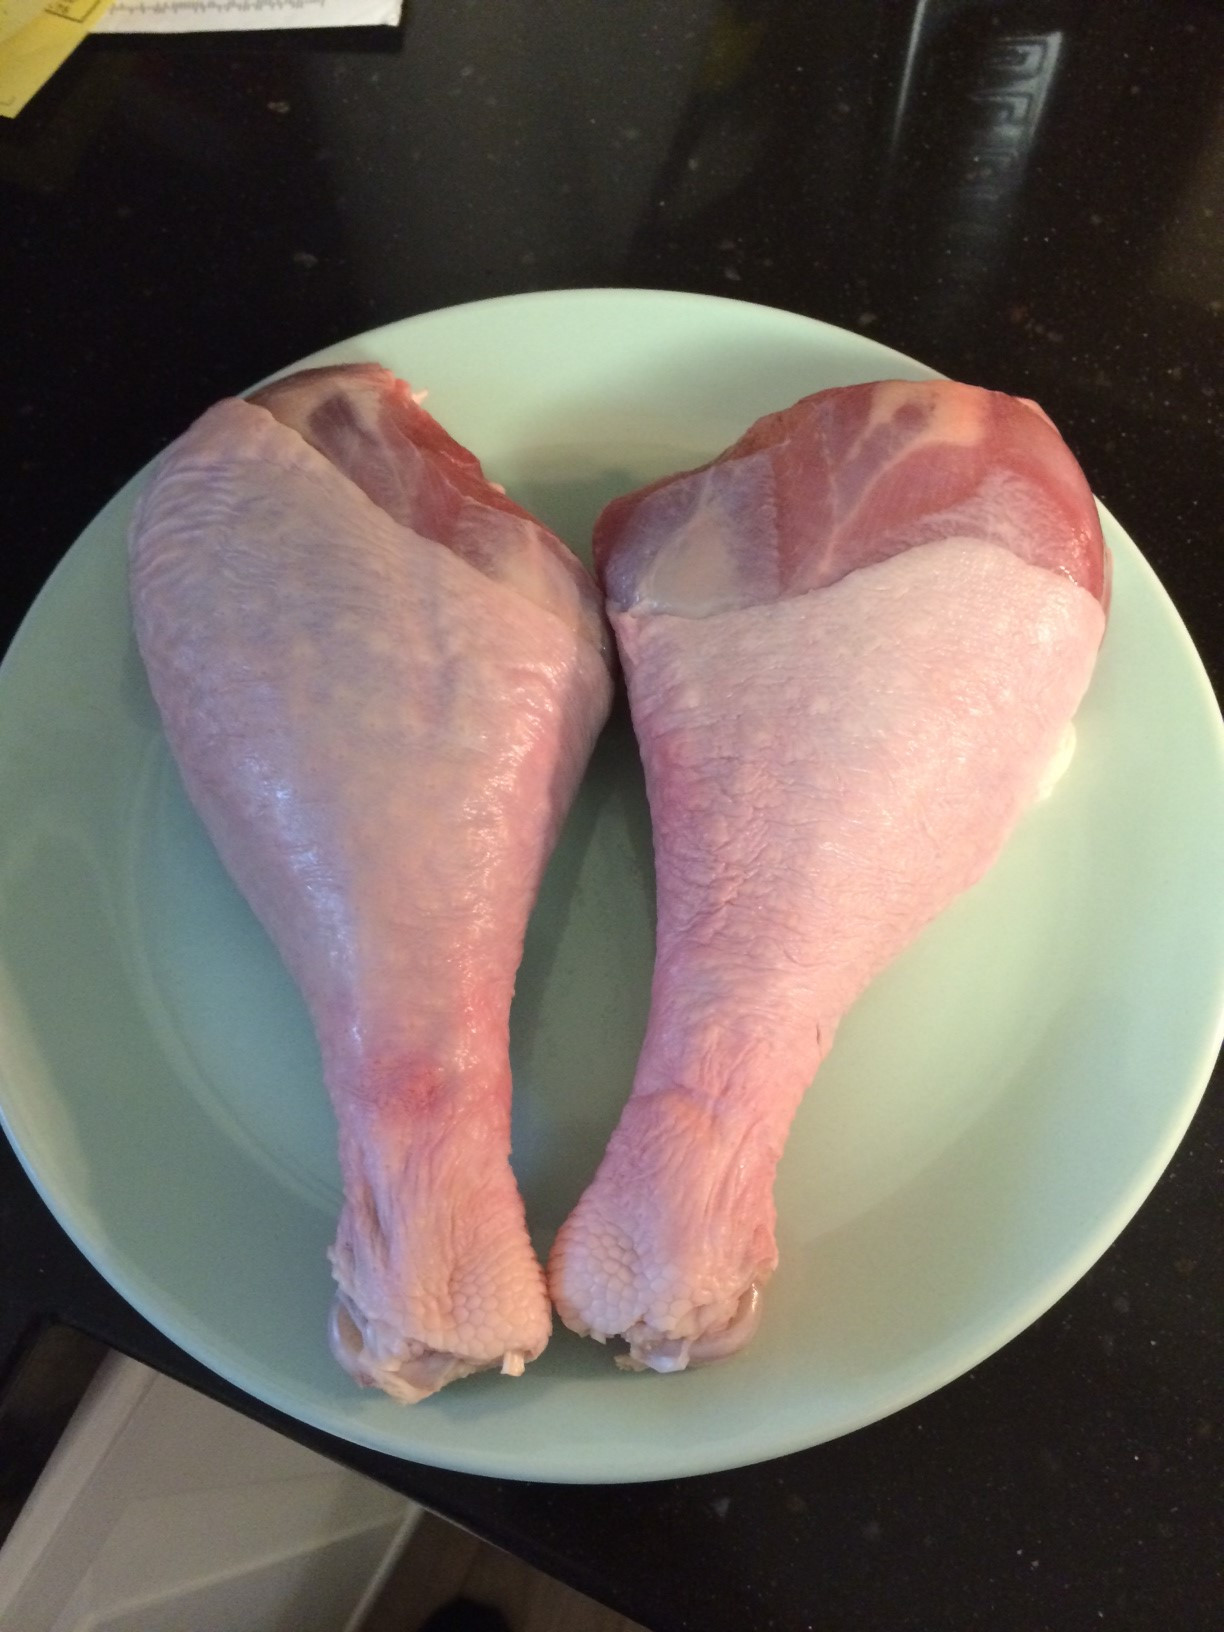 Smoked Turkey Legs For Sale
 raw giant turkey legs for sale